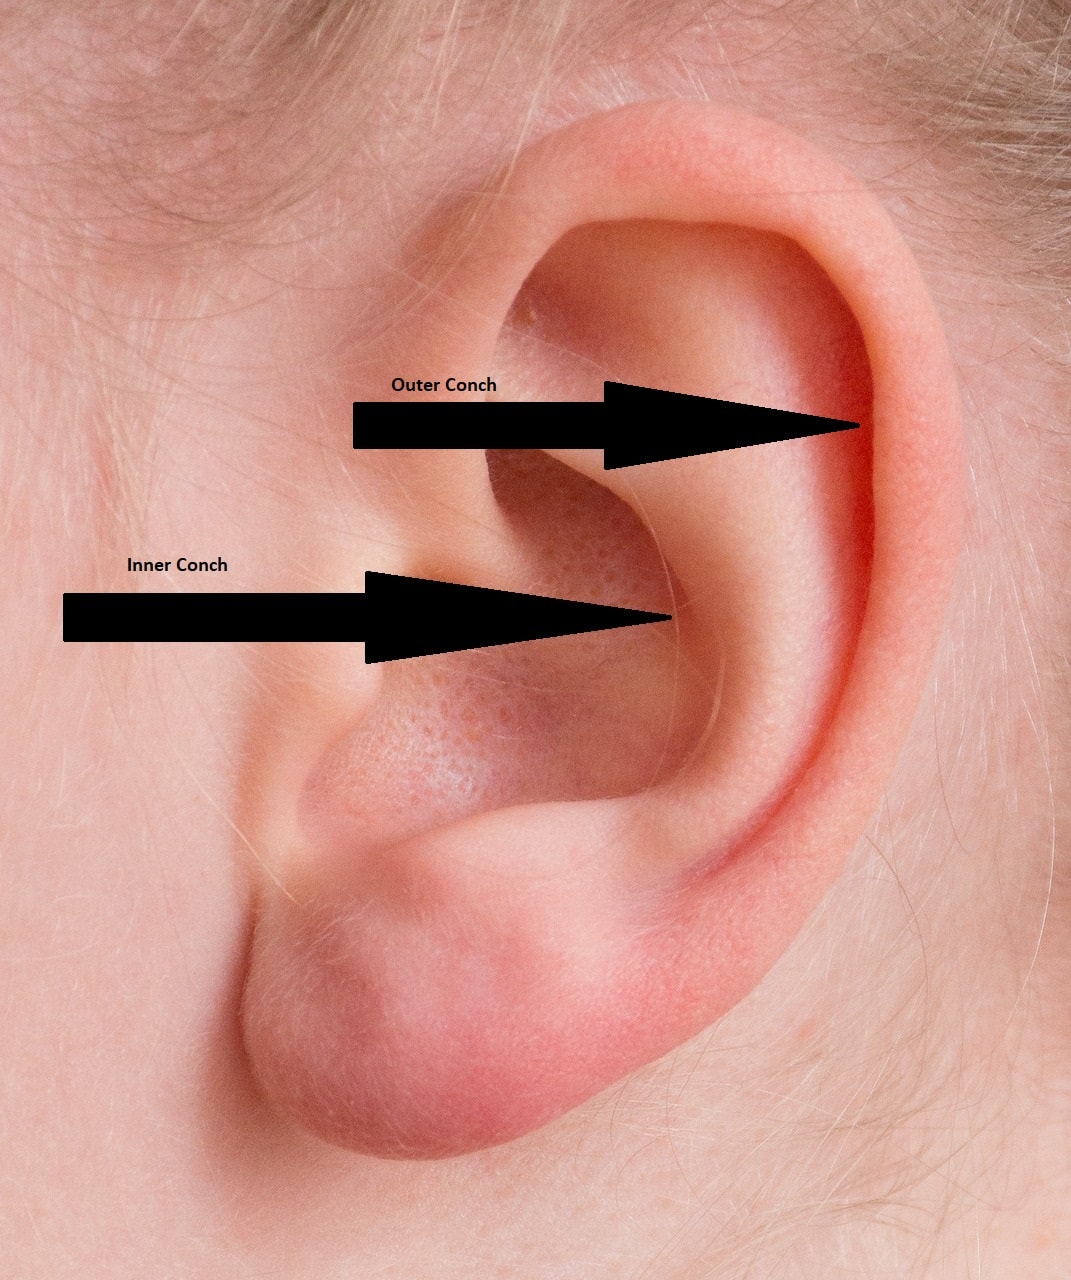 Conch piercing location on ear